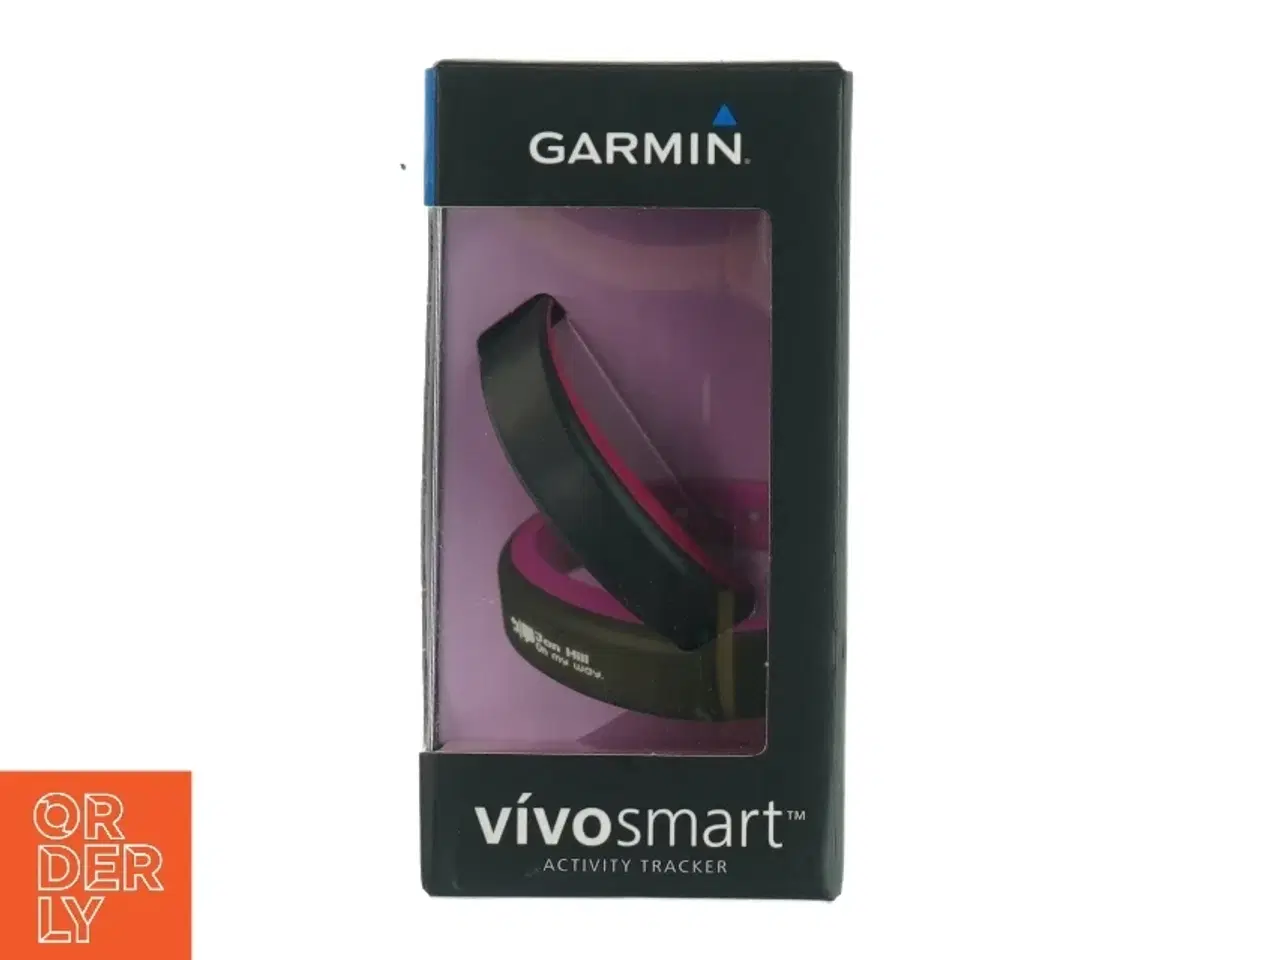 Billede 1 - Vivo smart løbeur (model ?) fra Garmin (str. Small)